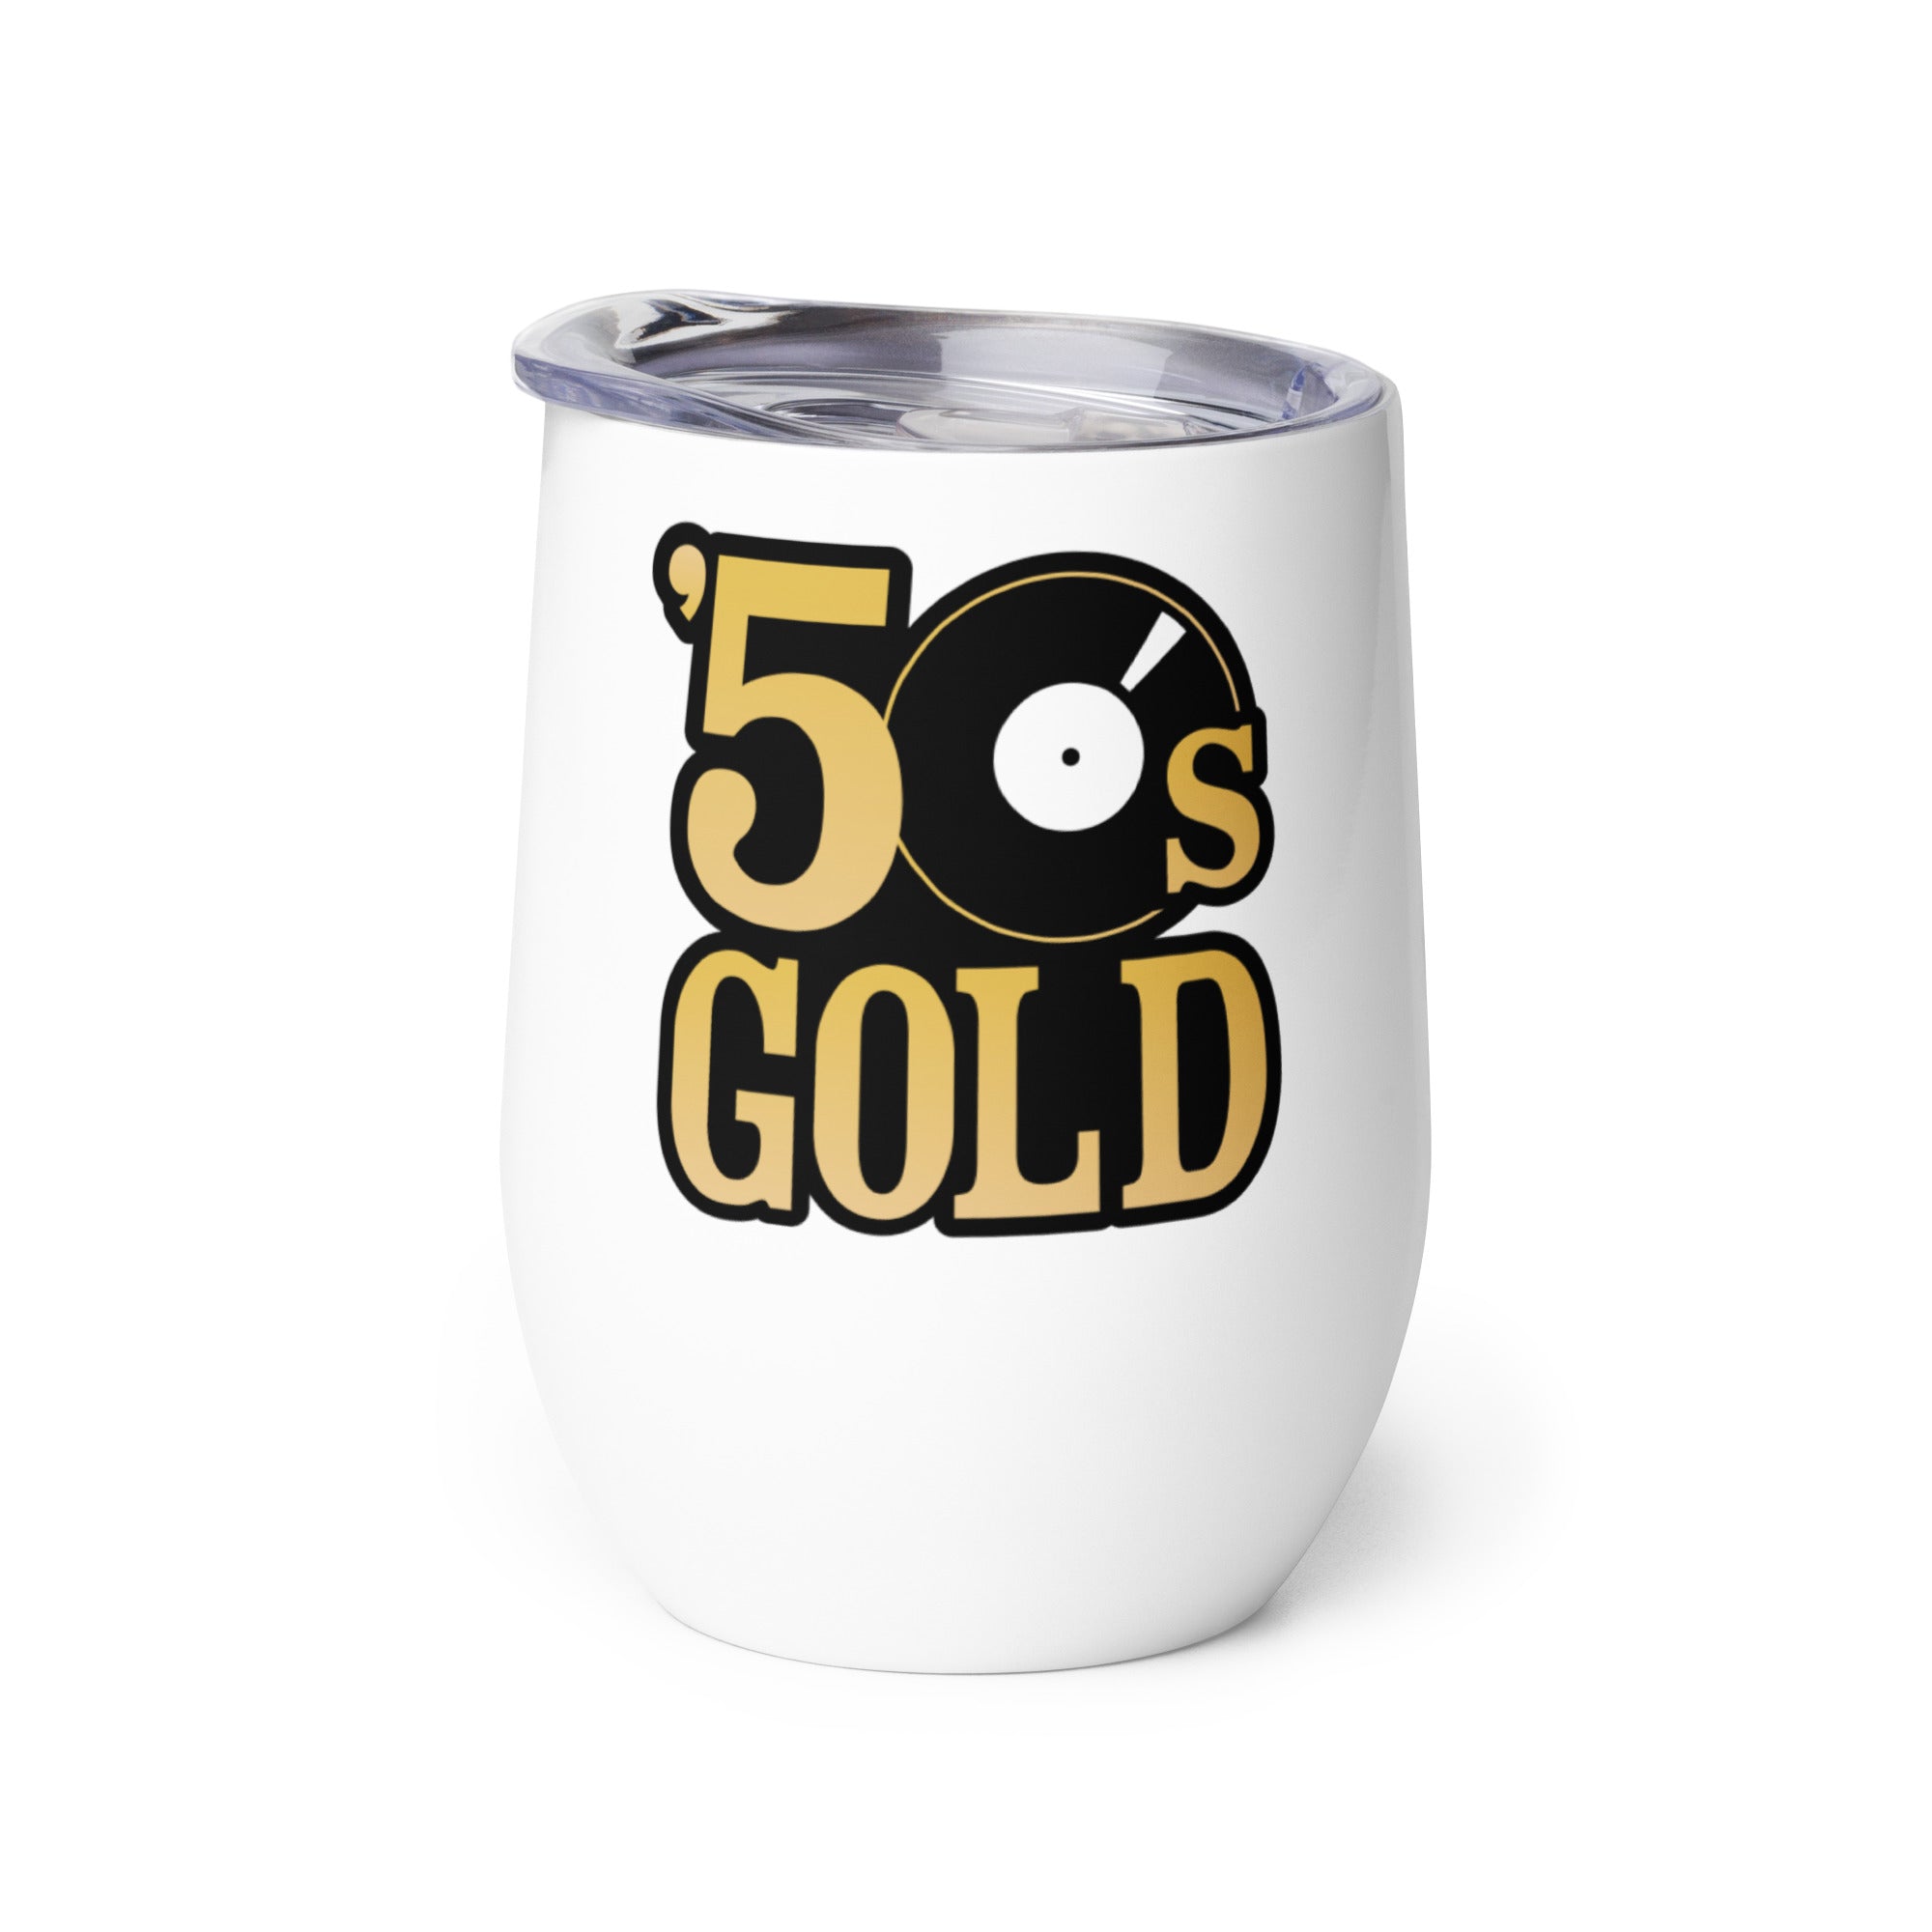 50s Gold: Wine Tumbler